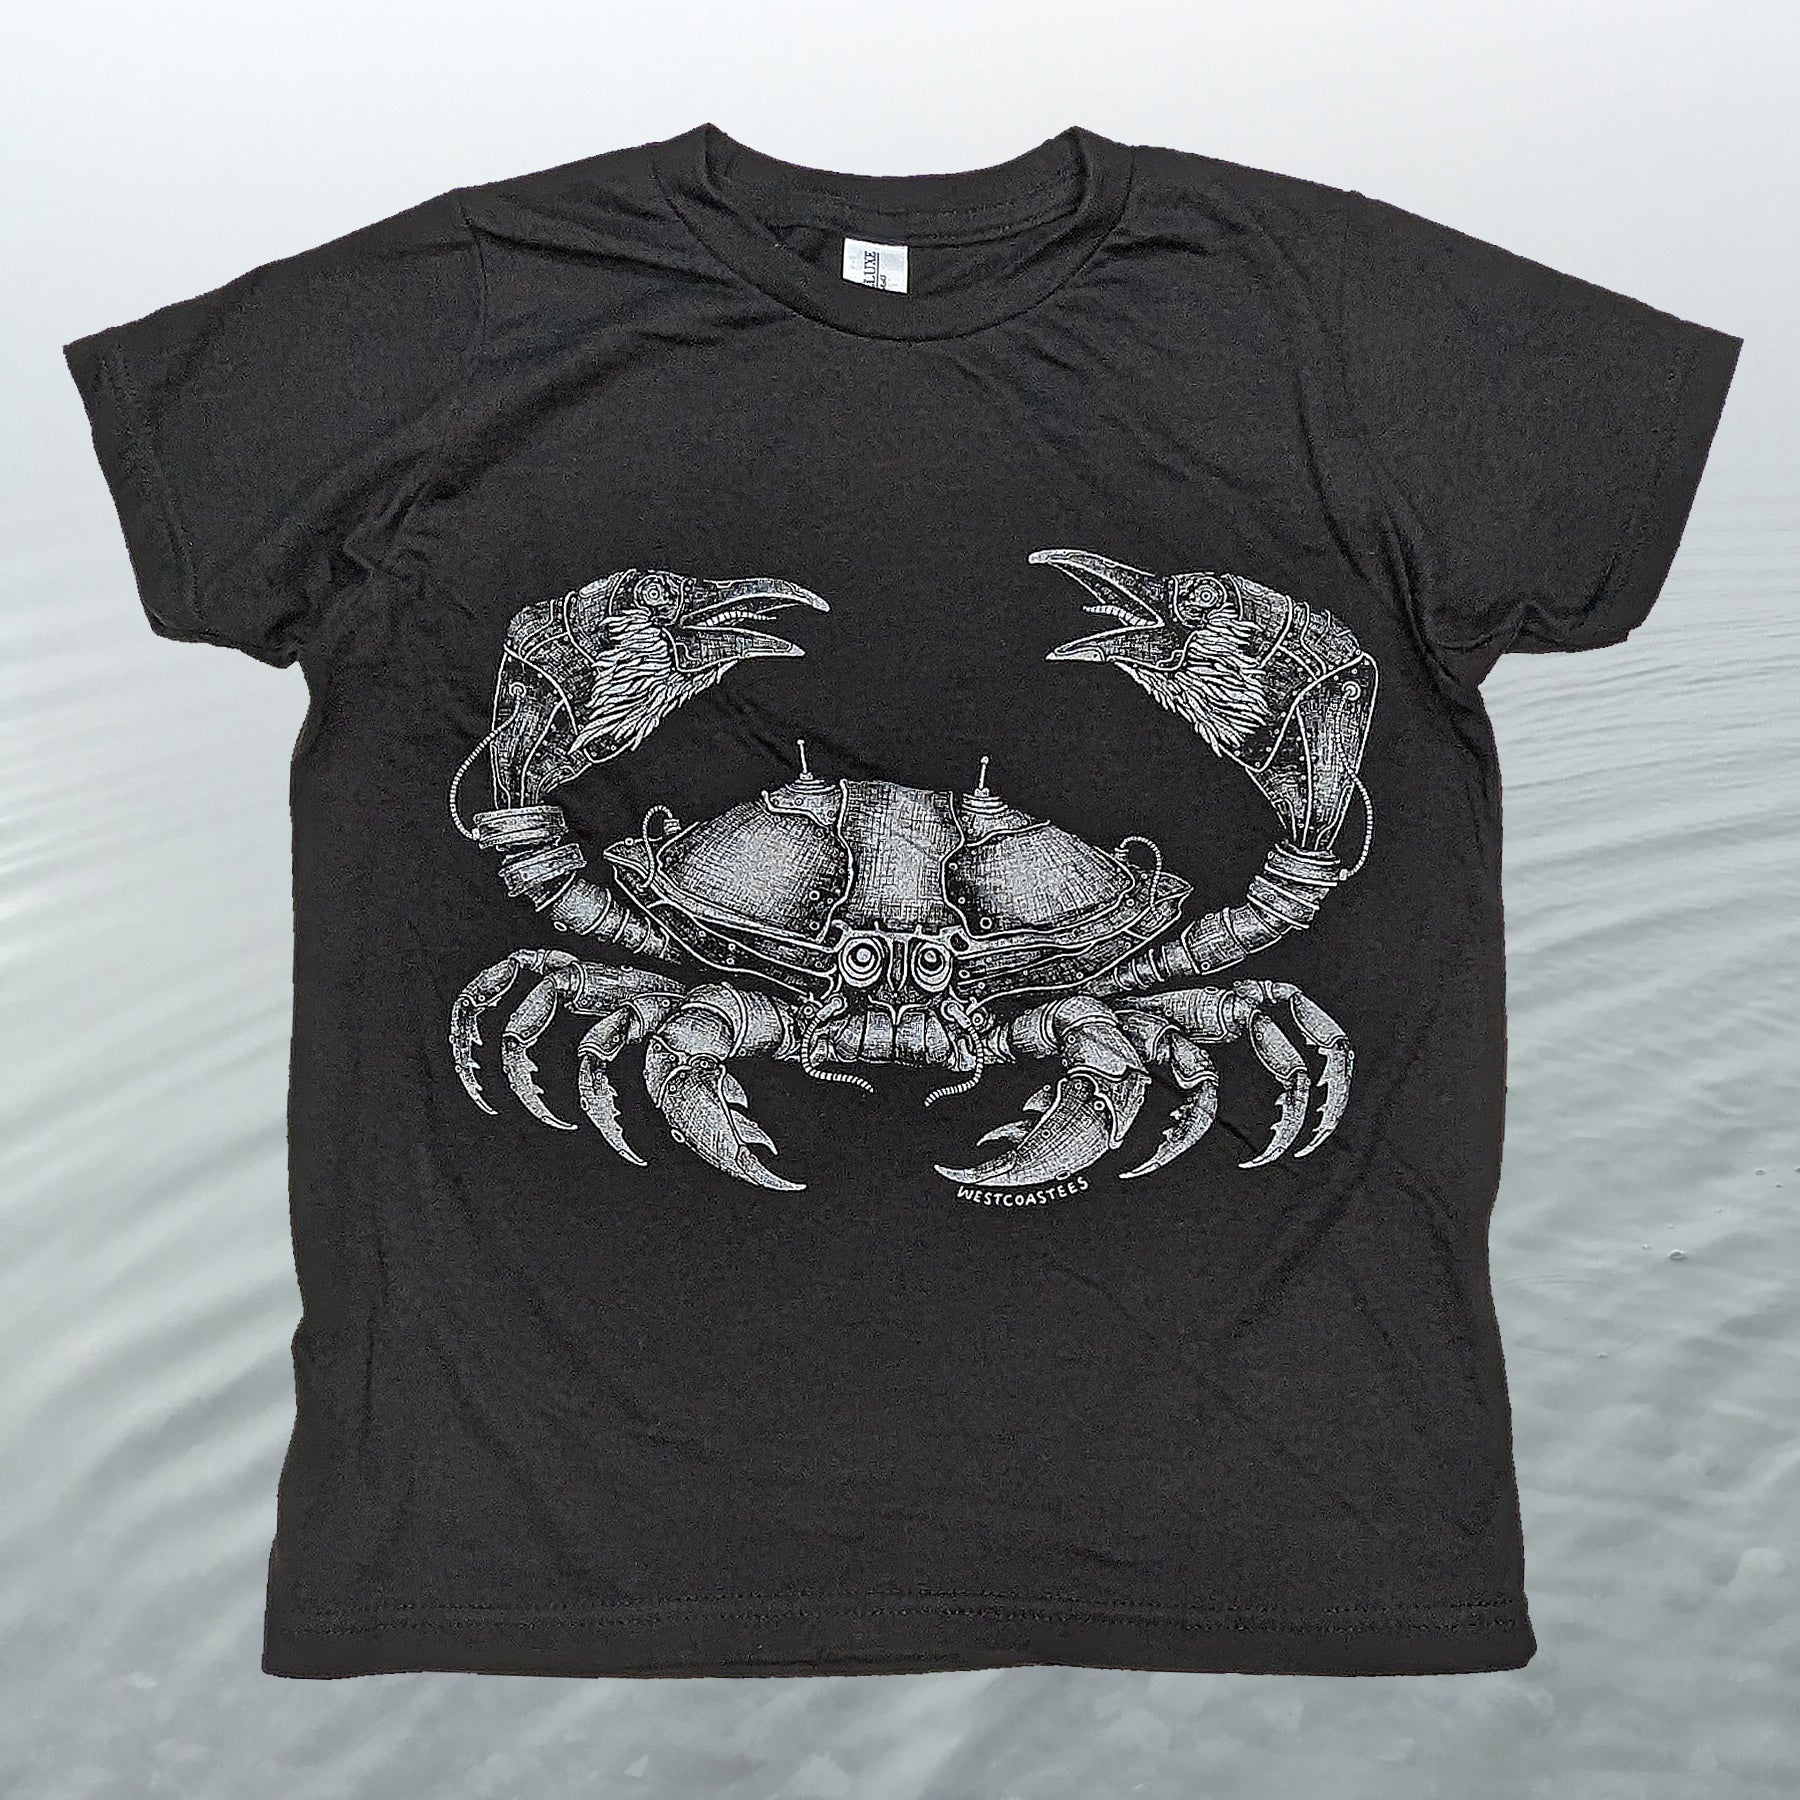 Kids Steampunk crab t-shirt